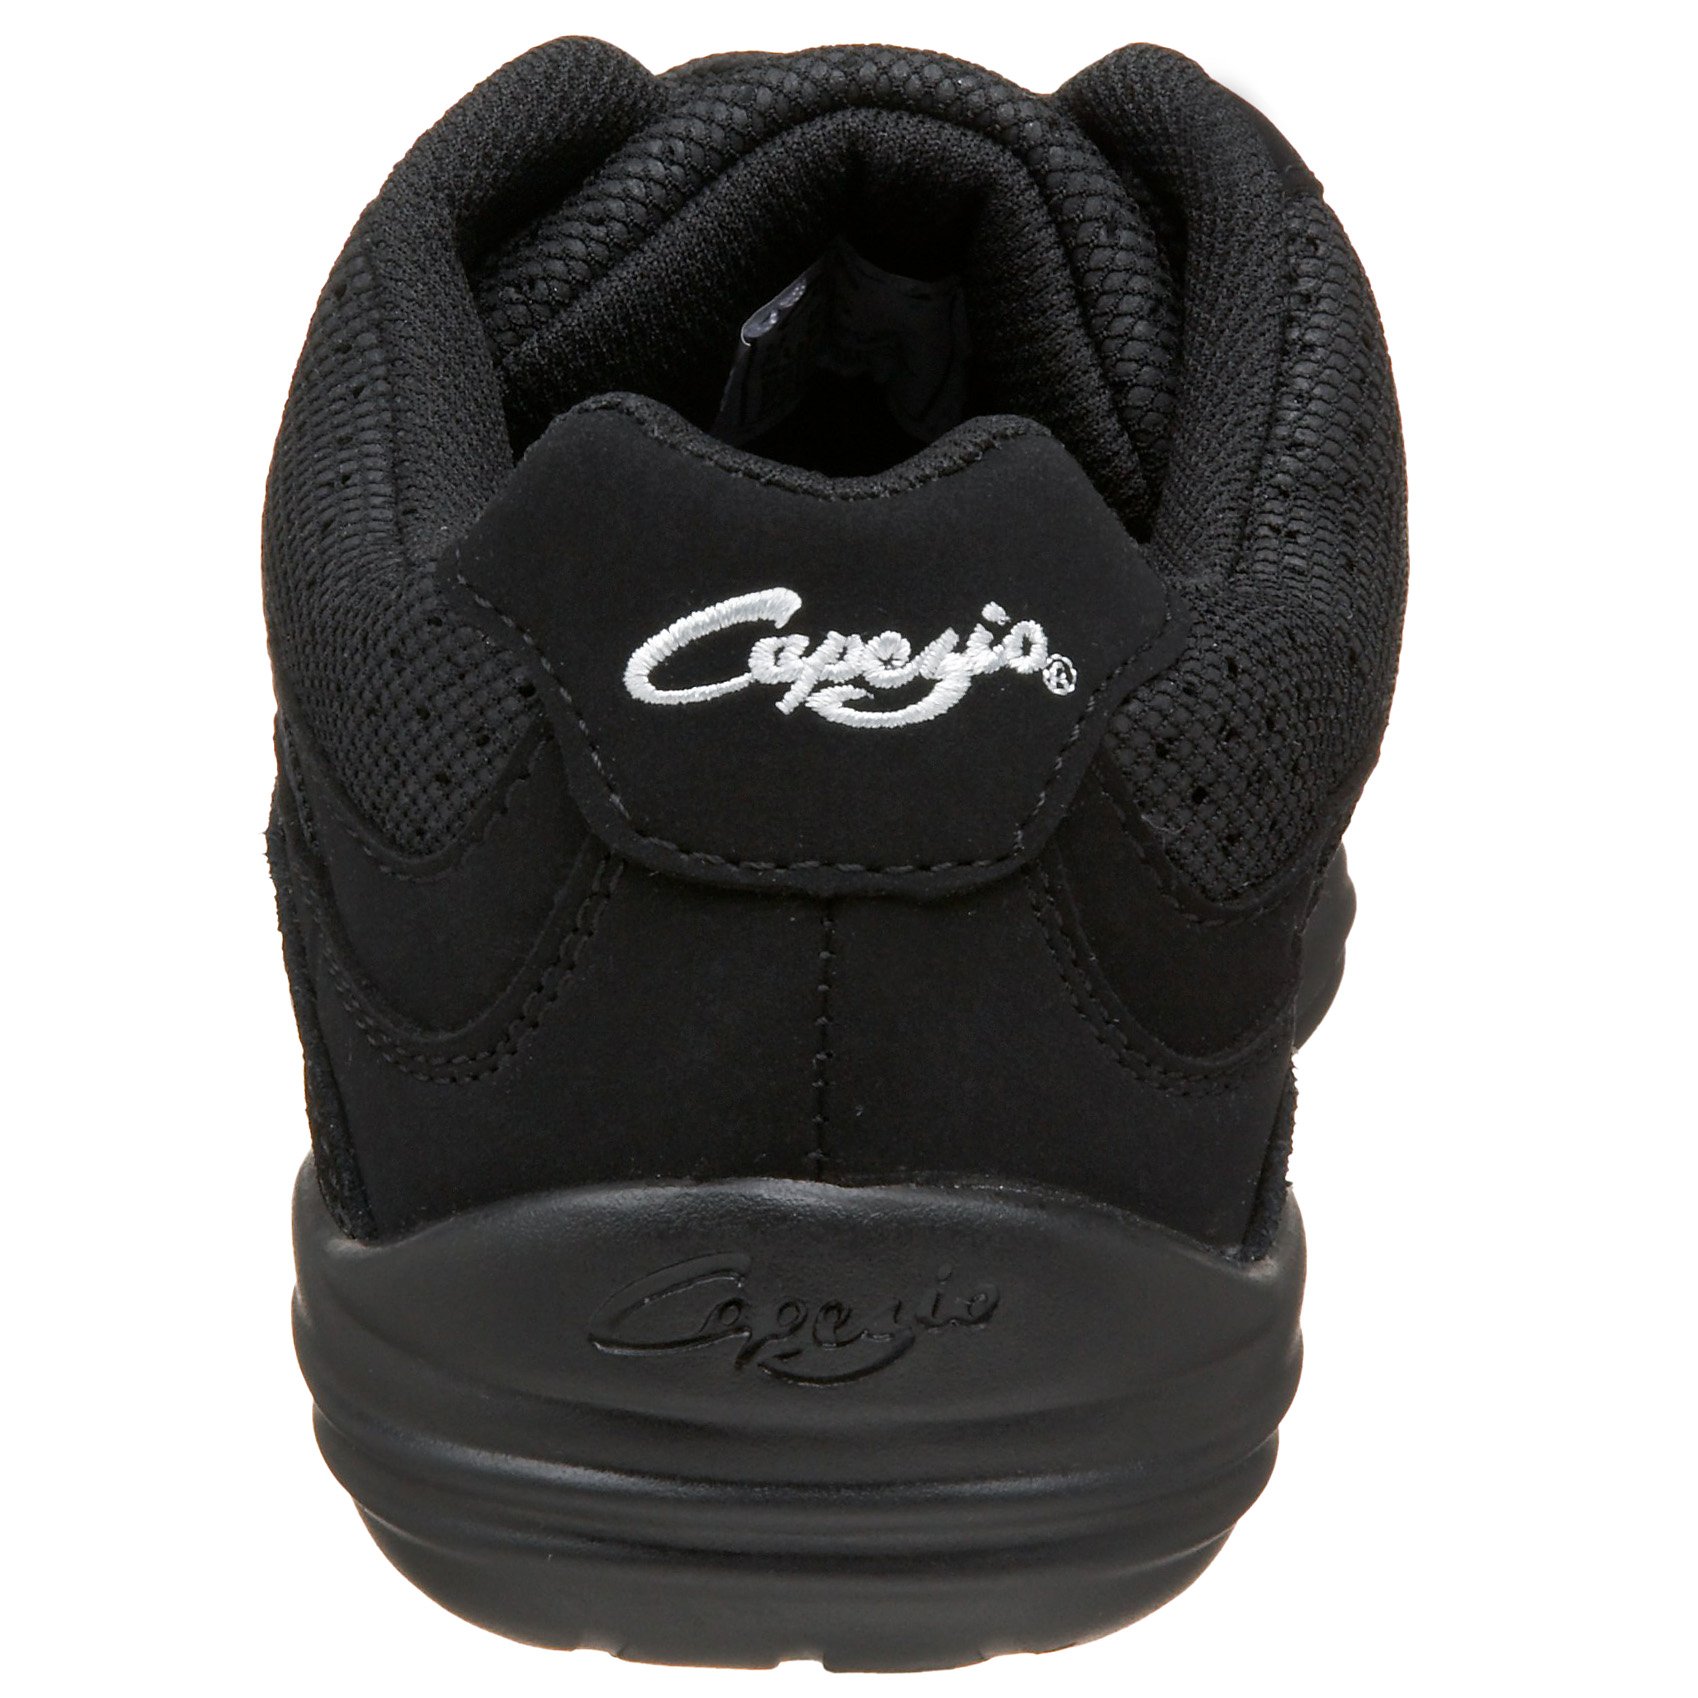 Capezio Women's Studio Shoes, Black, 10